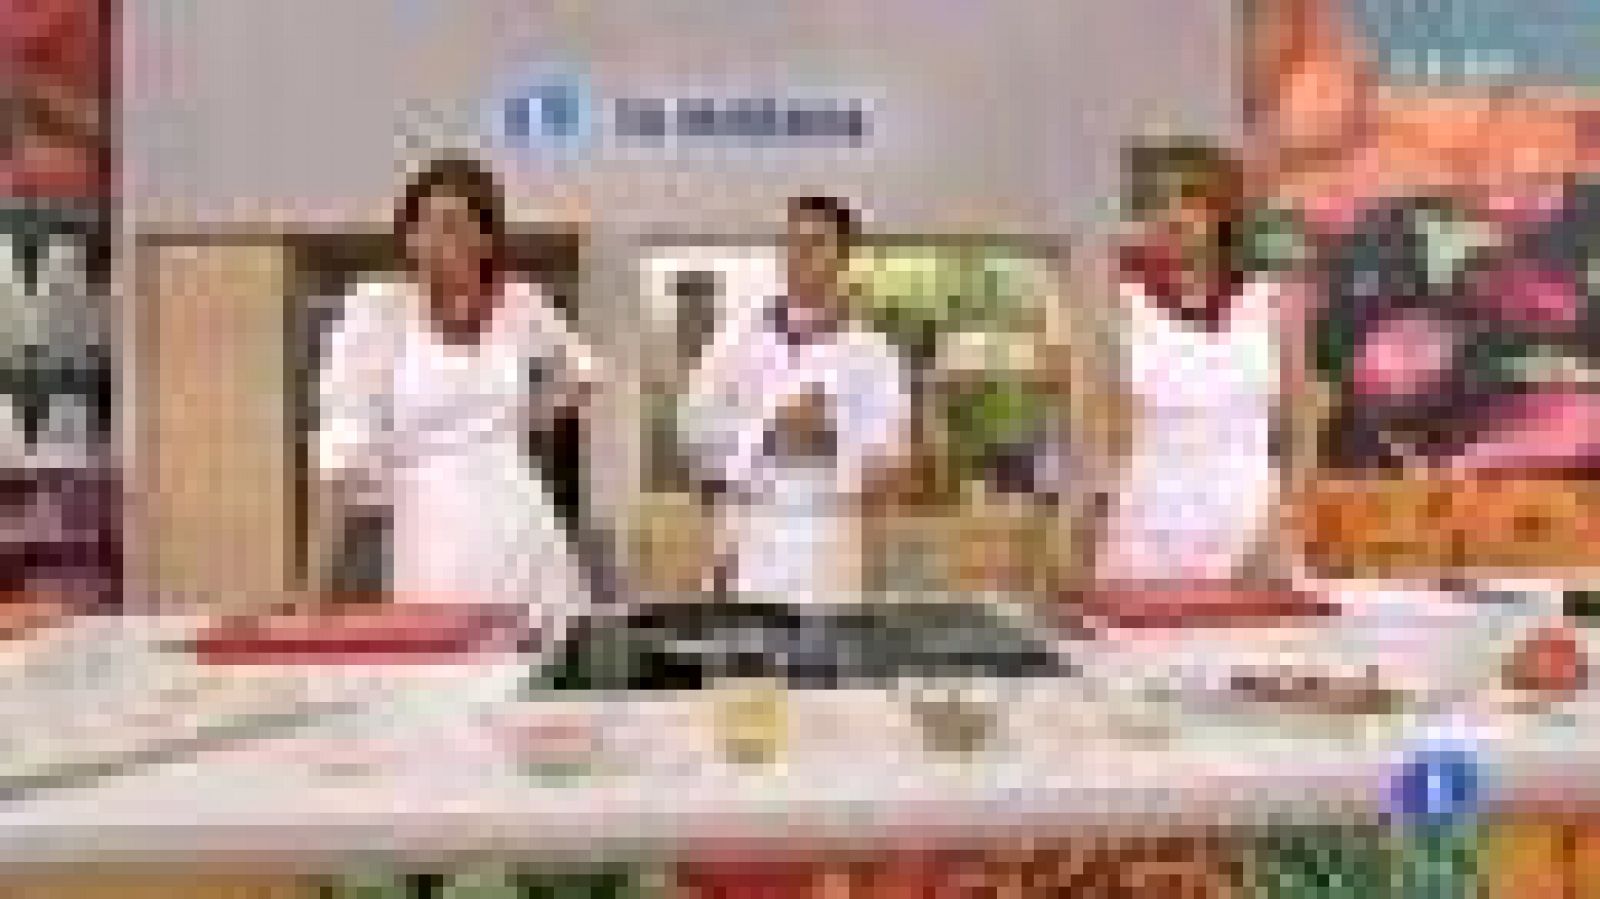  Saber cocinar - Sepia al ajillo con vasitos de calabacín (11/07/2011)